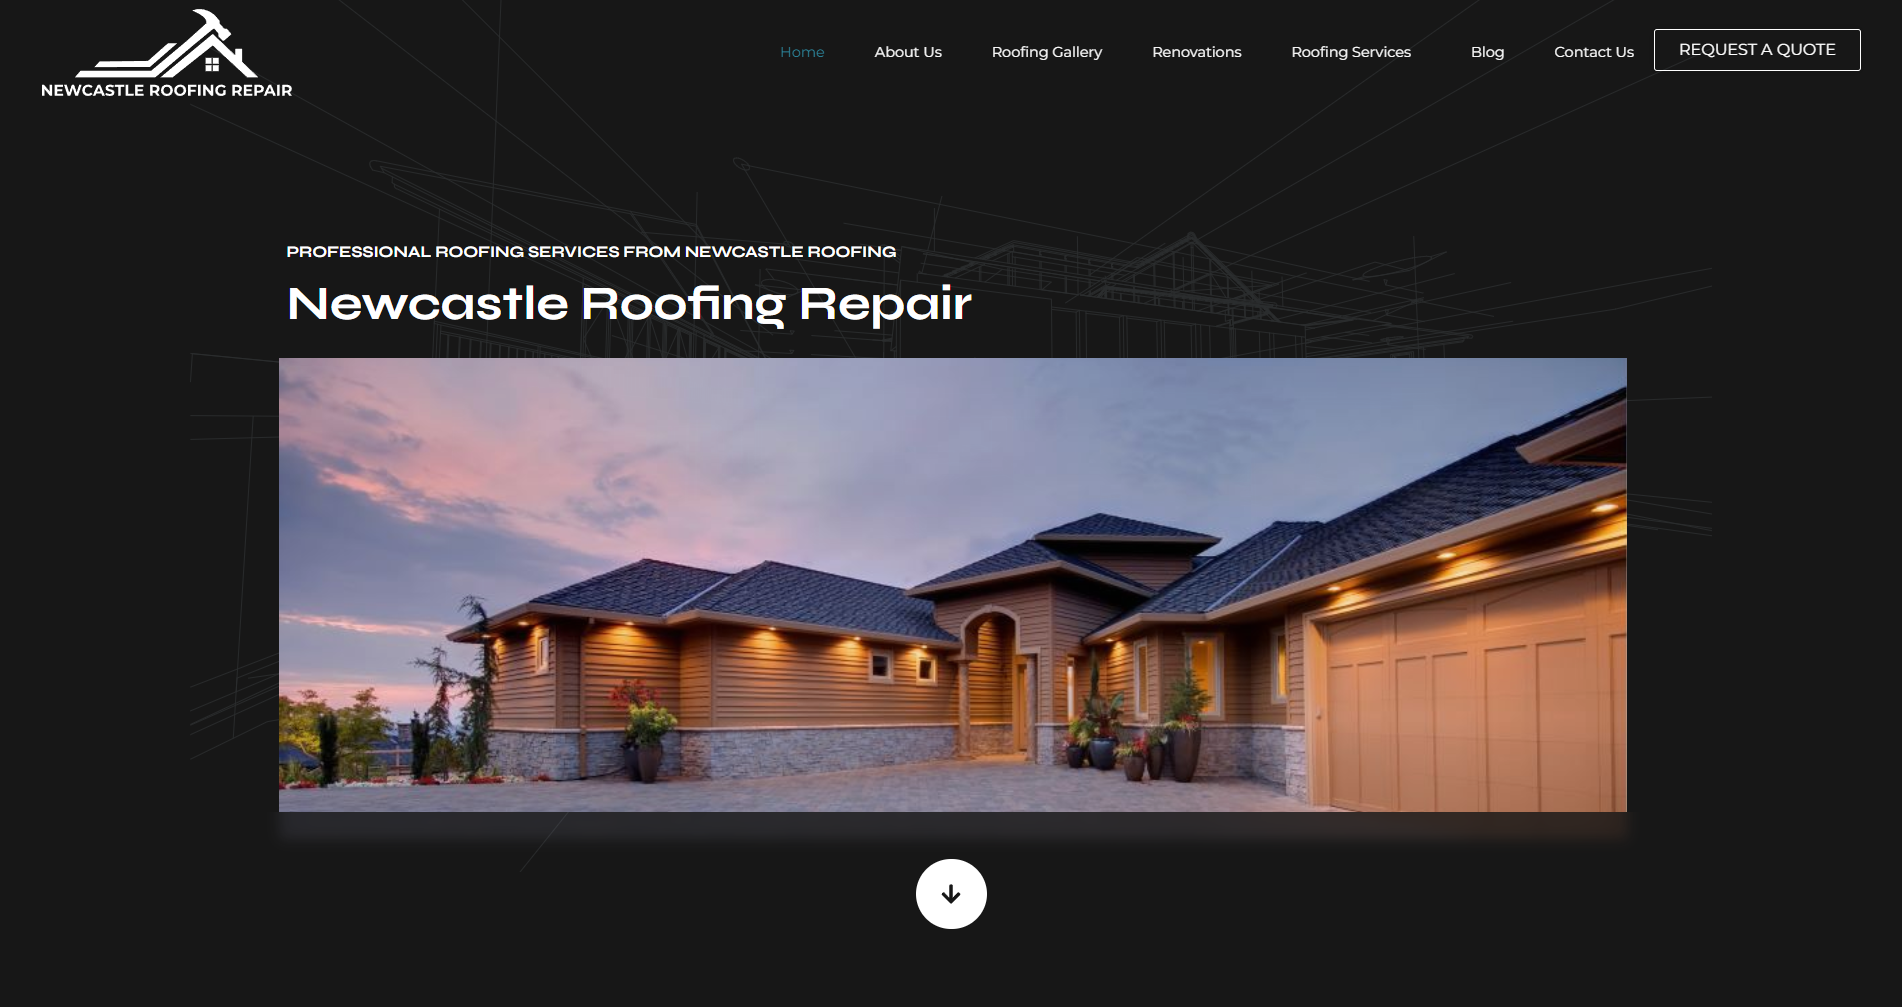 fireshot capture 063 professional roofing services in newcastle www.newcastleroofingrepair.com.au